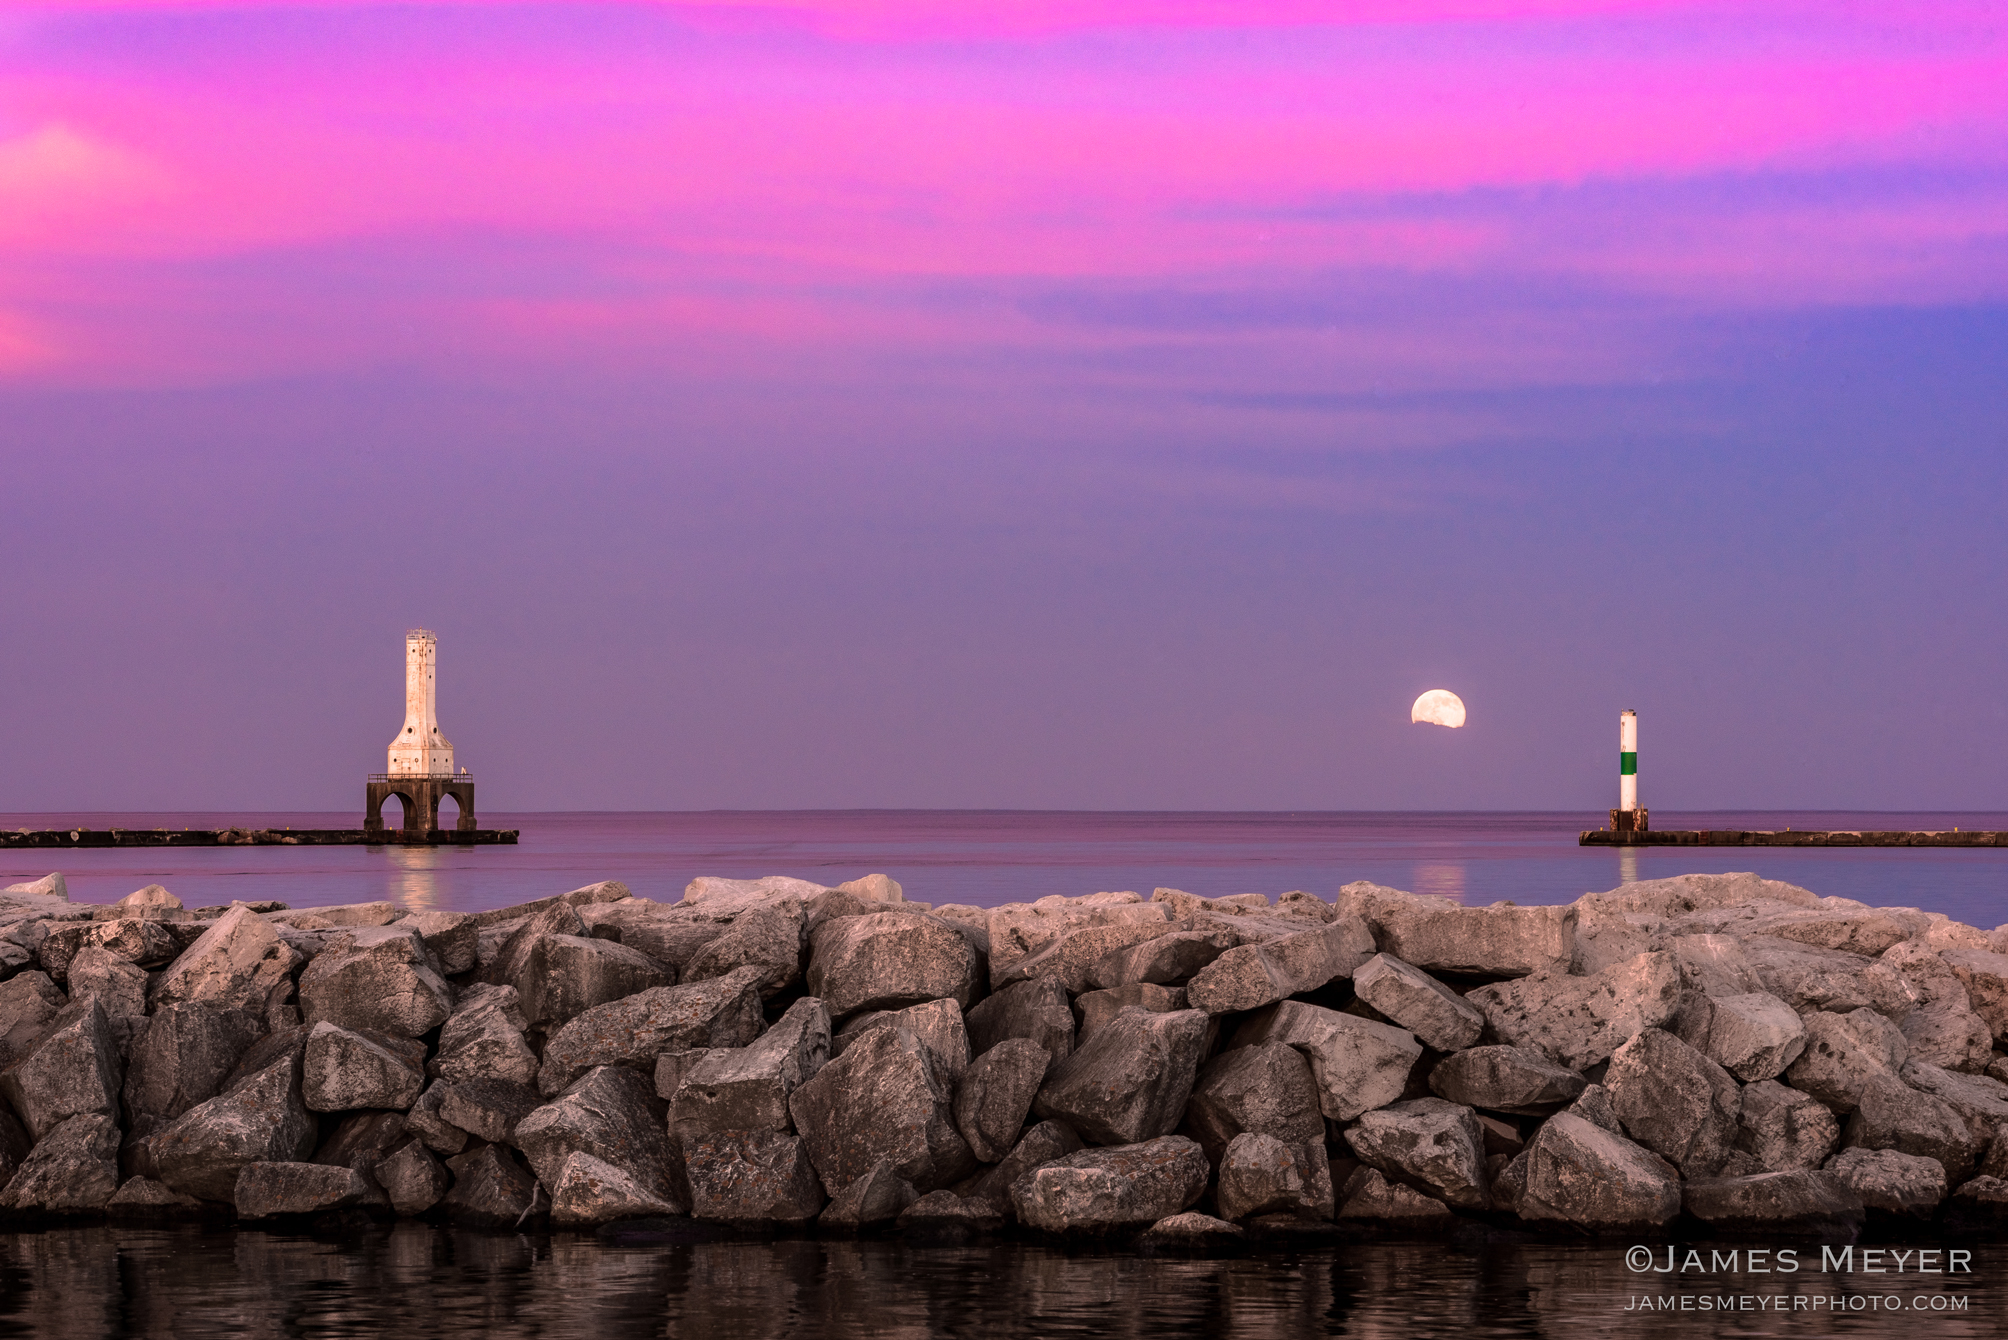 Full moon arives June 20, 2016 featuring the iconic Port Washington WI lighthouse